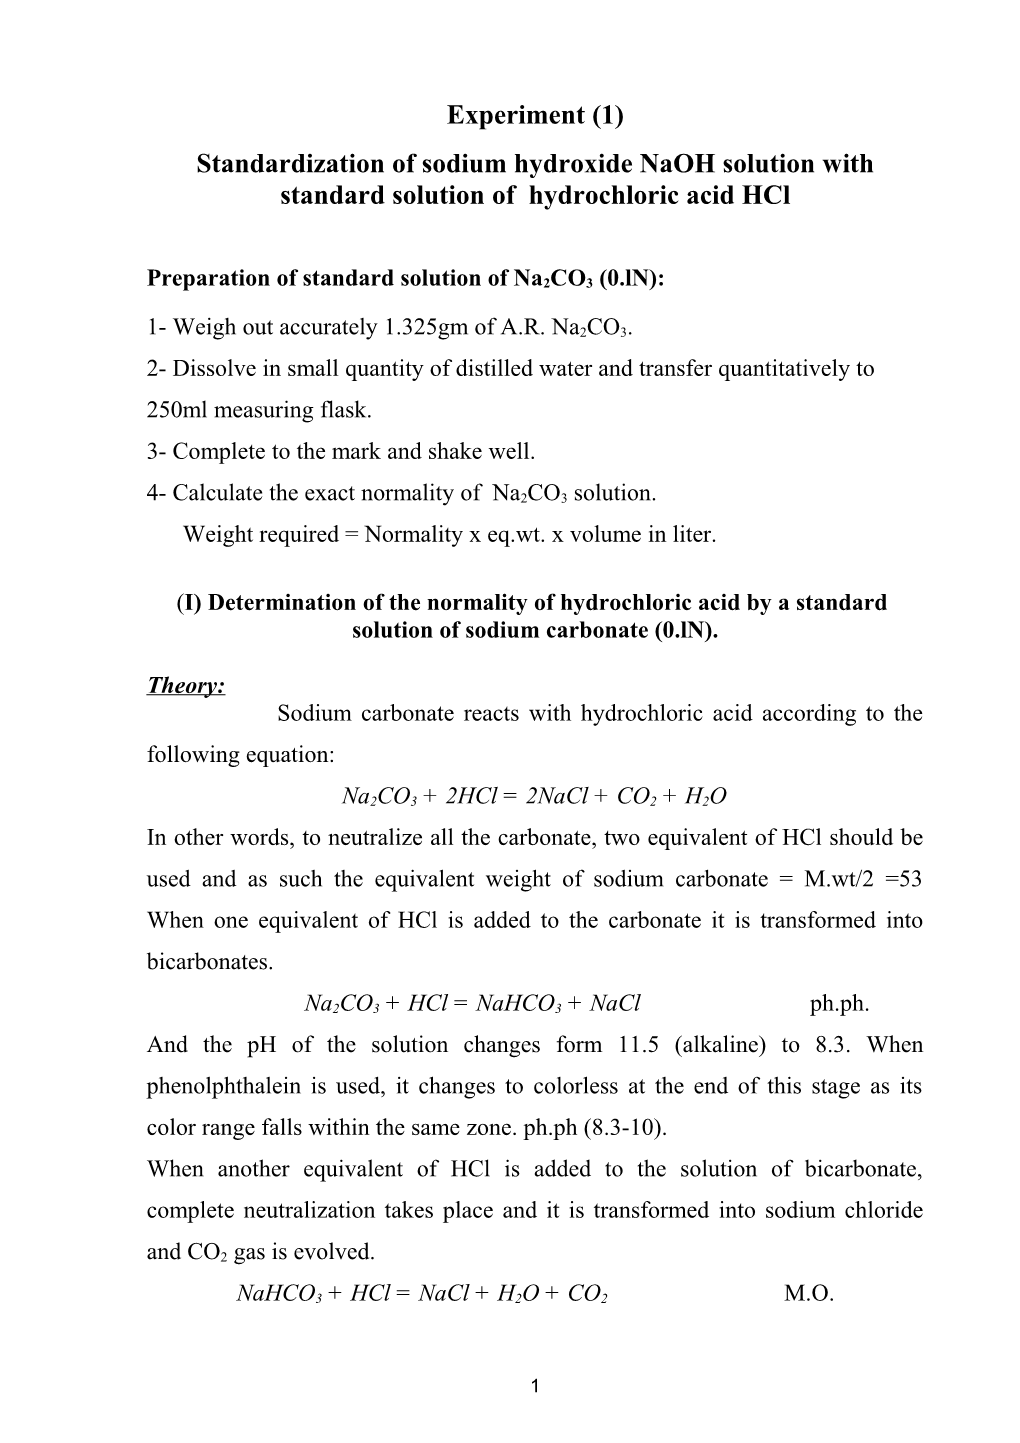 Standardization of Sodium Hydroxide Naoh Solution with Standard Solution of Hydrochloric